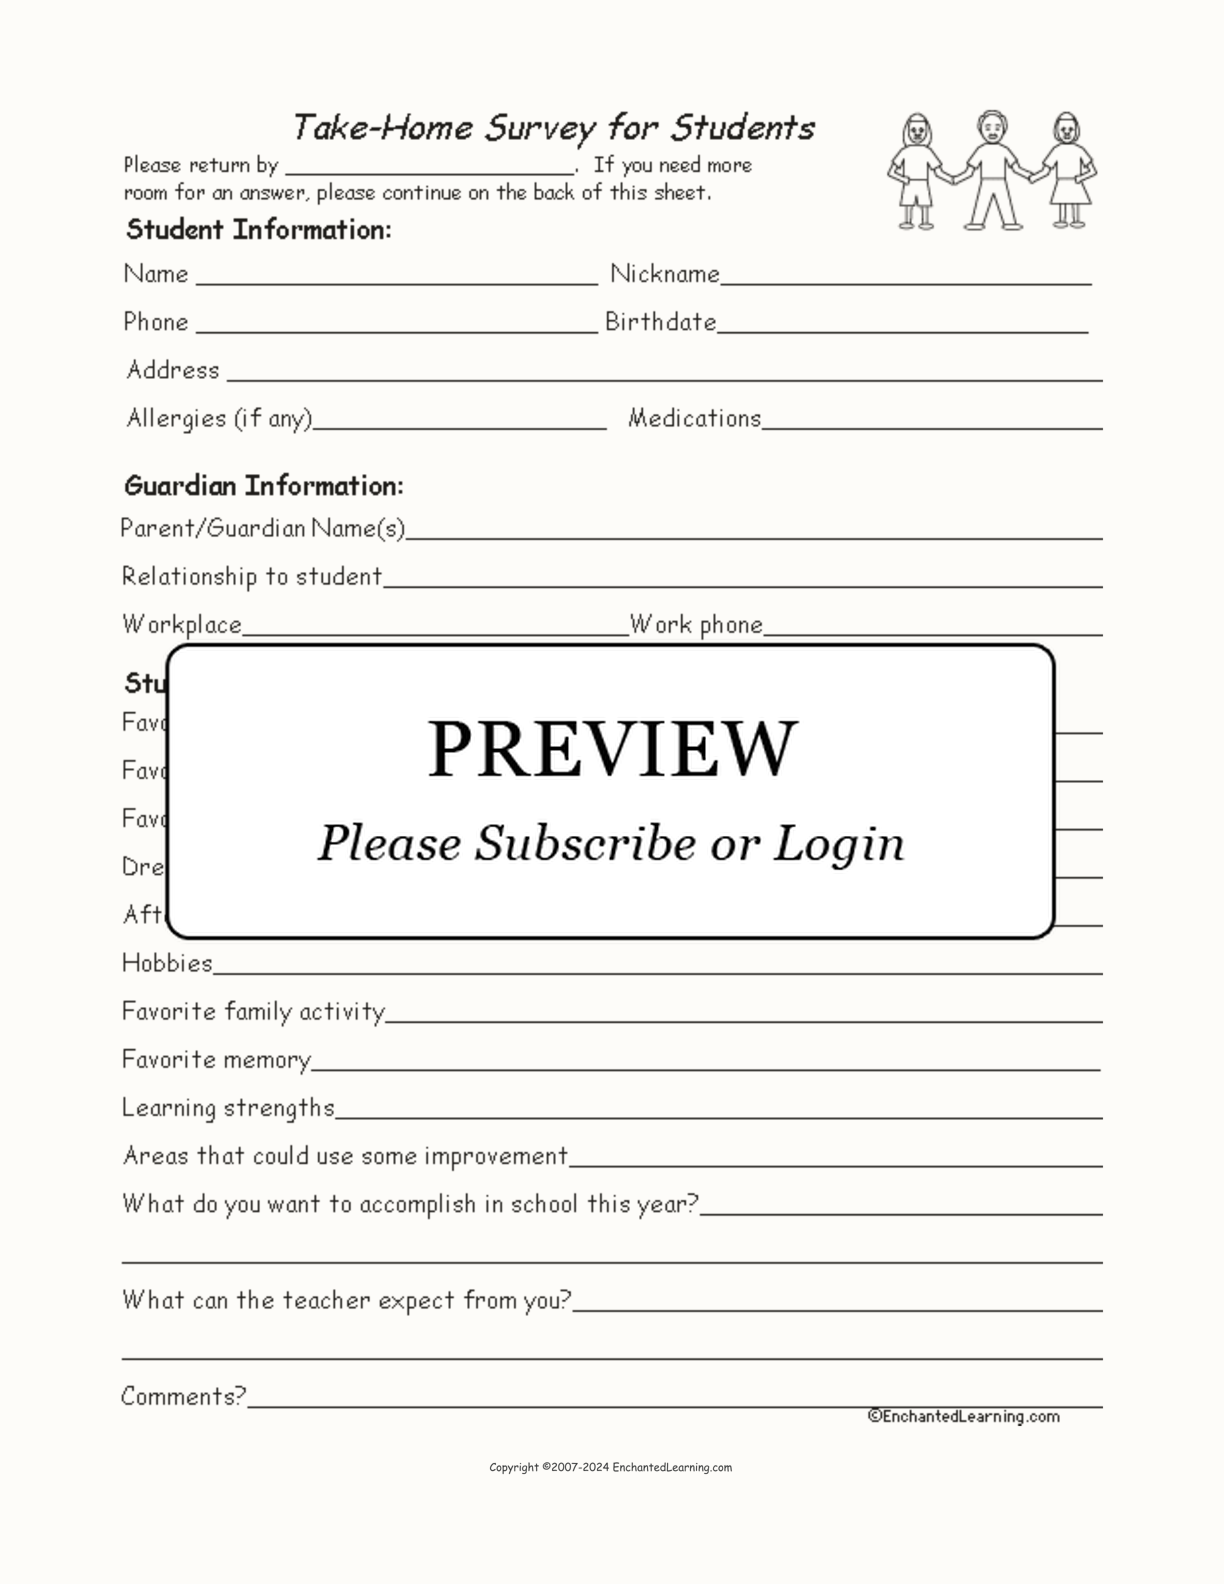 Take-Home Student Survey interactive printout page 1